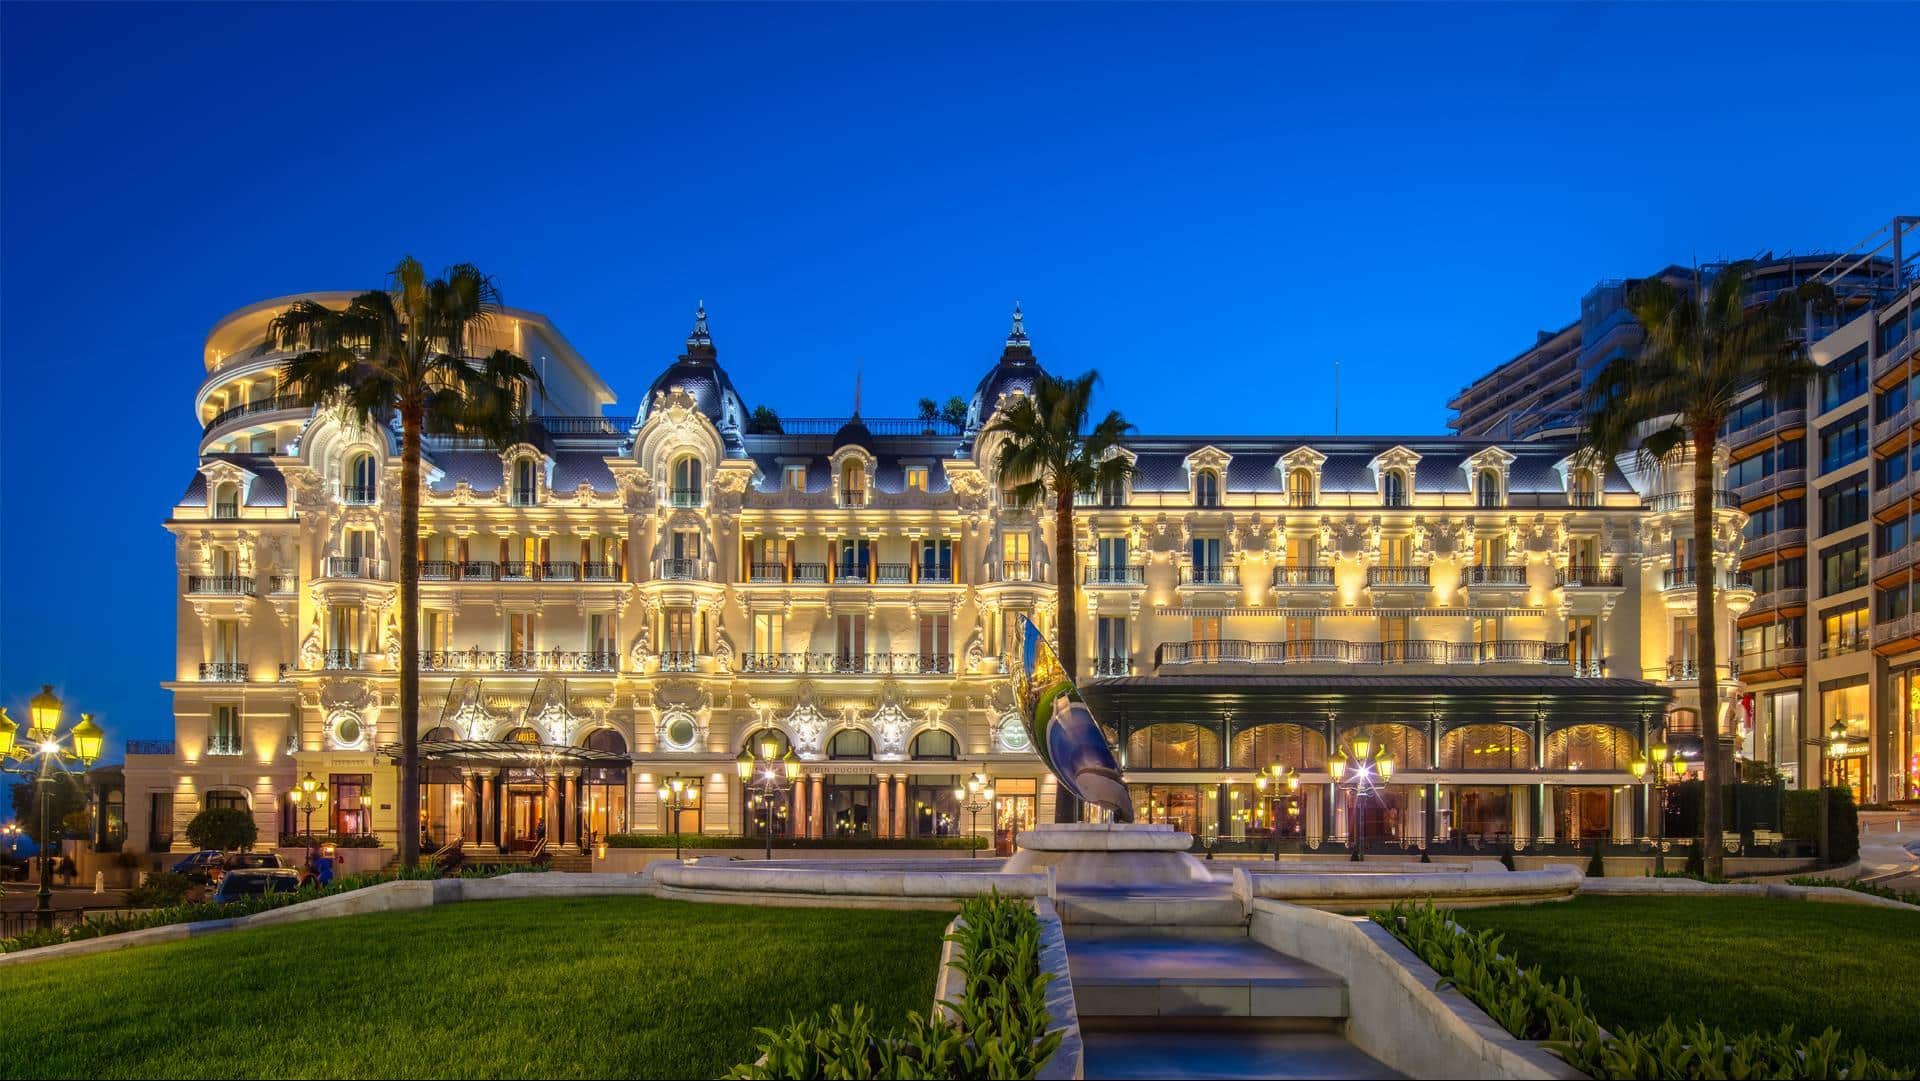 Imgage the Hotel de Paris Monte-Carlo during the evening, l